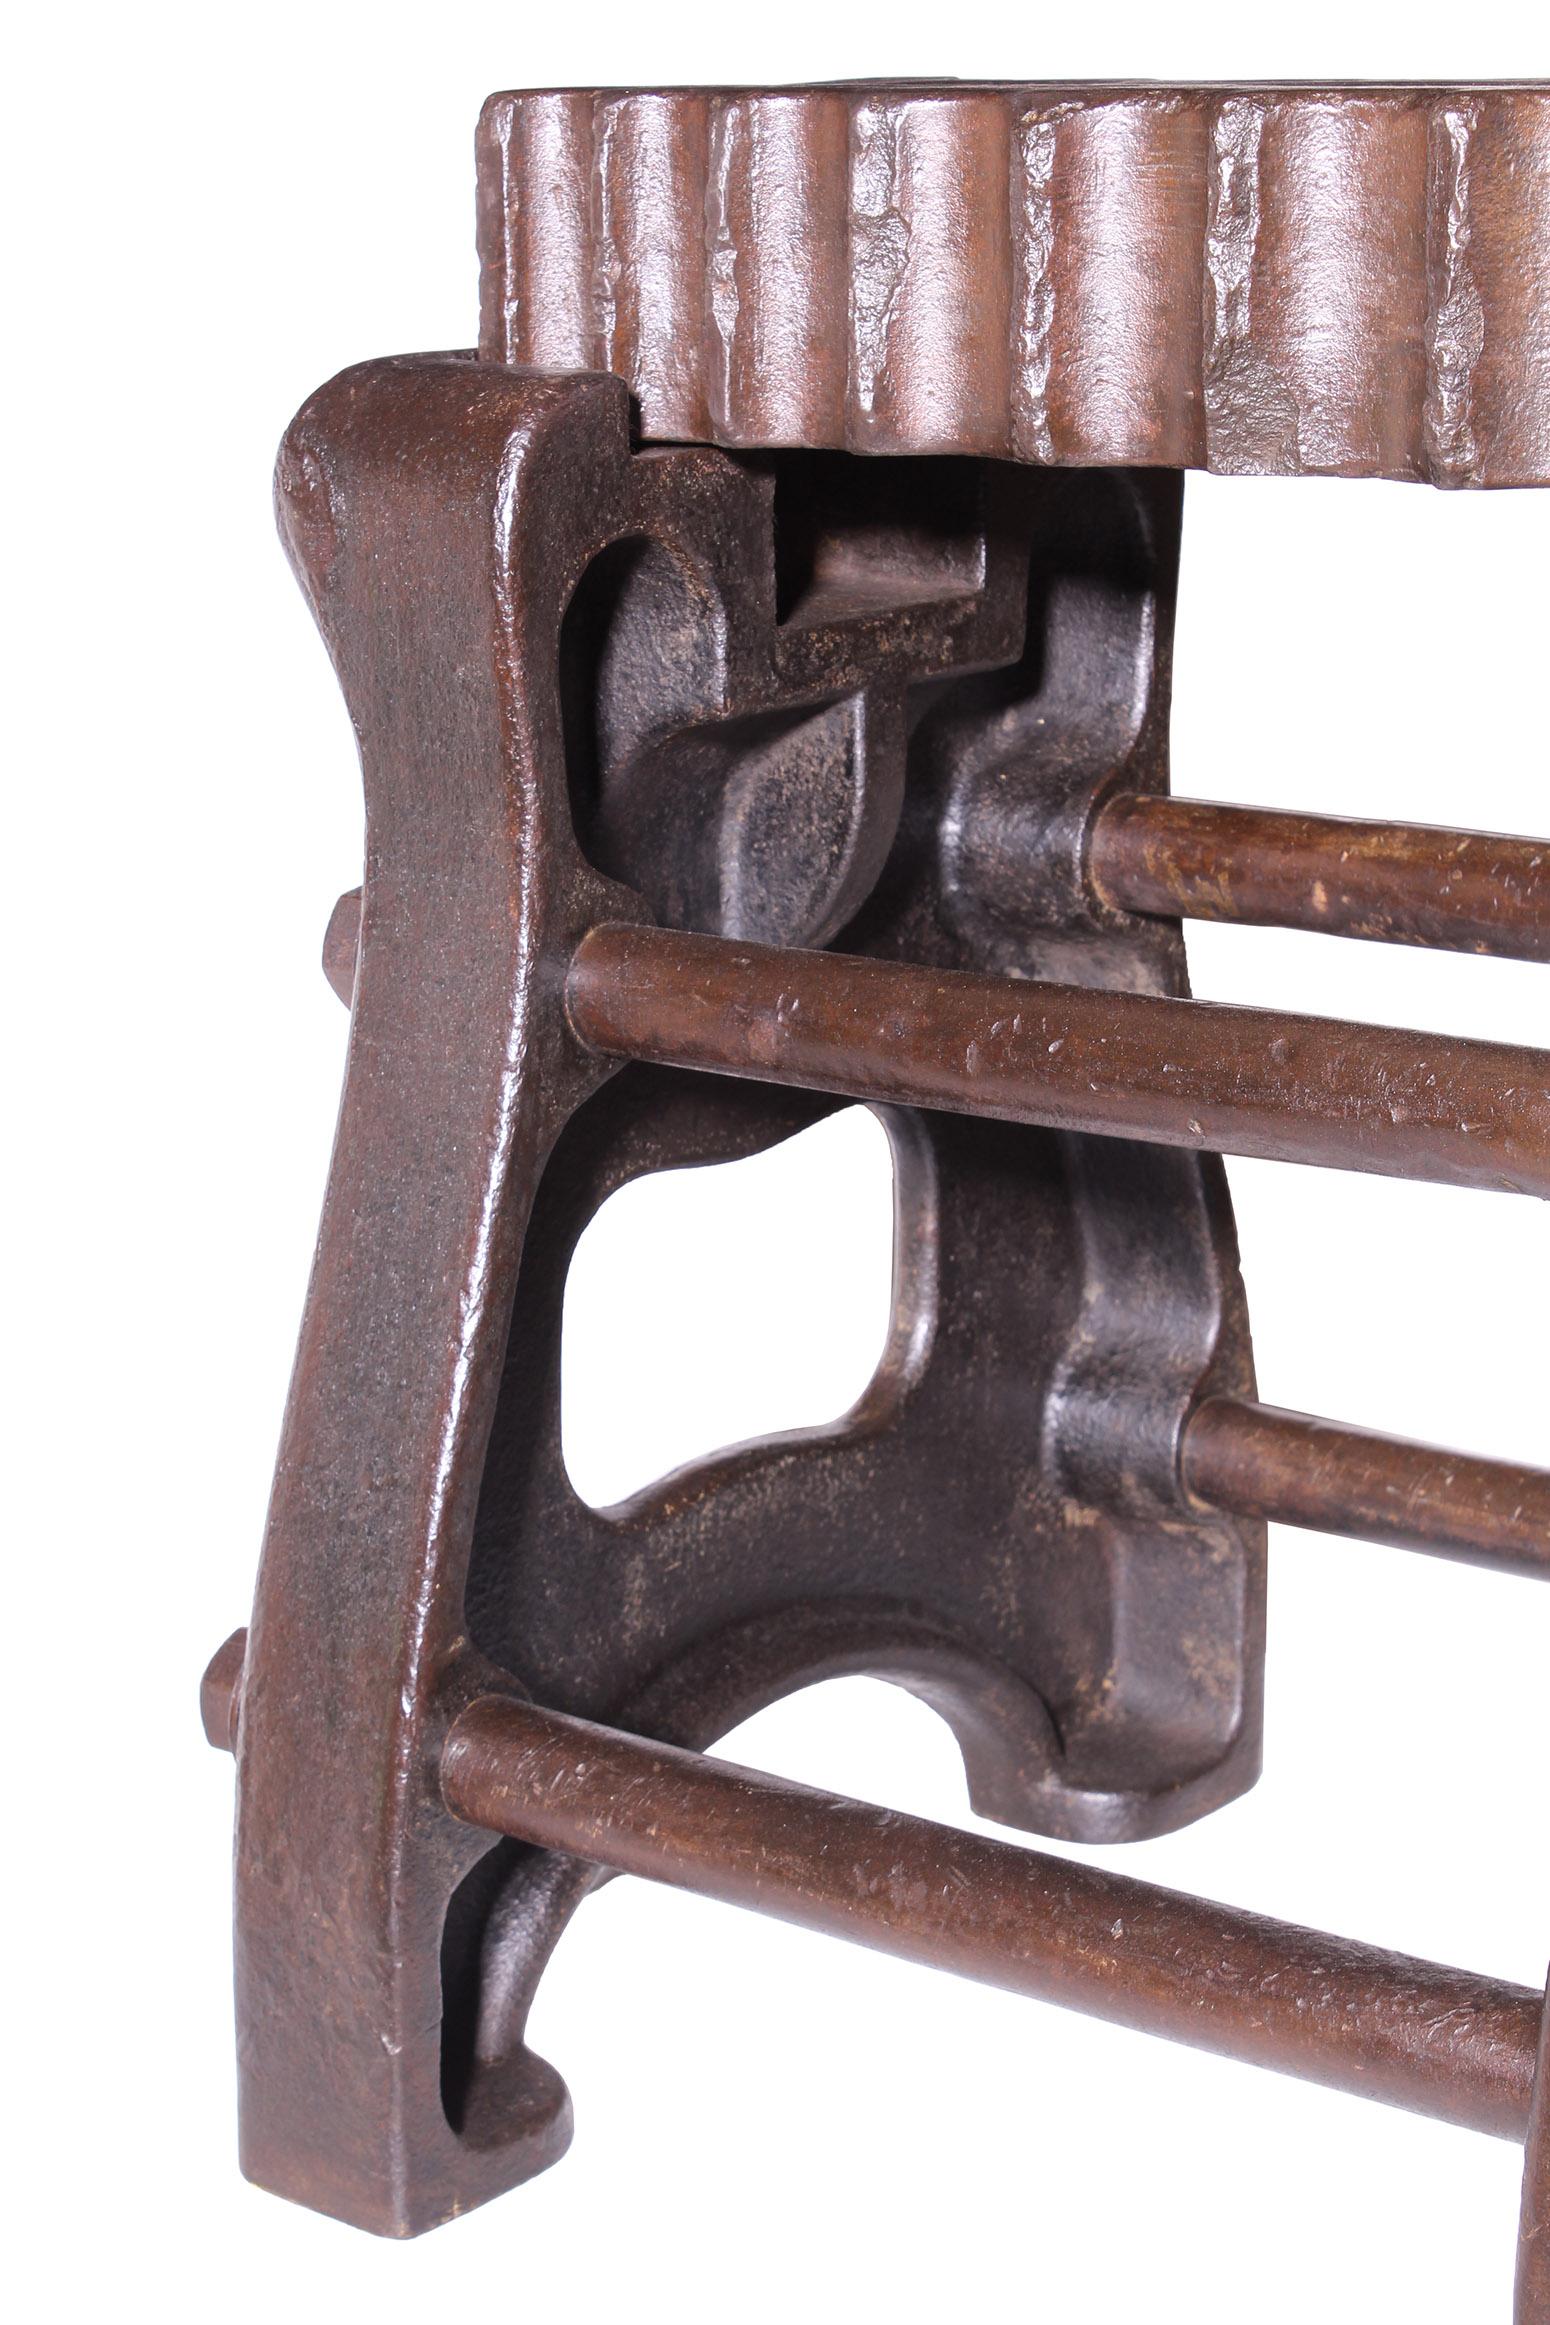 Authentic Blacksmiths Solid Cast-Iron Swage Block 3